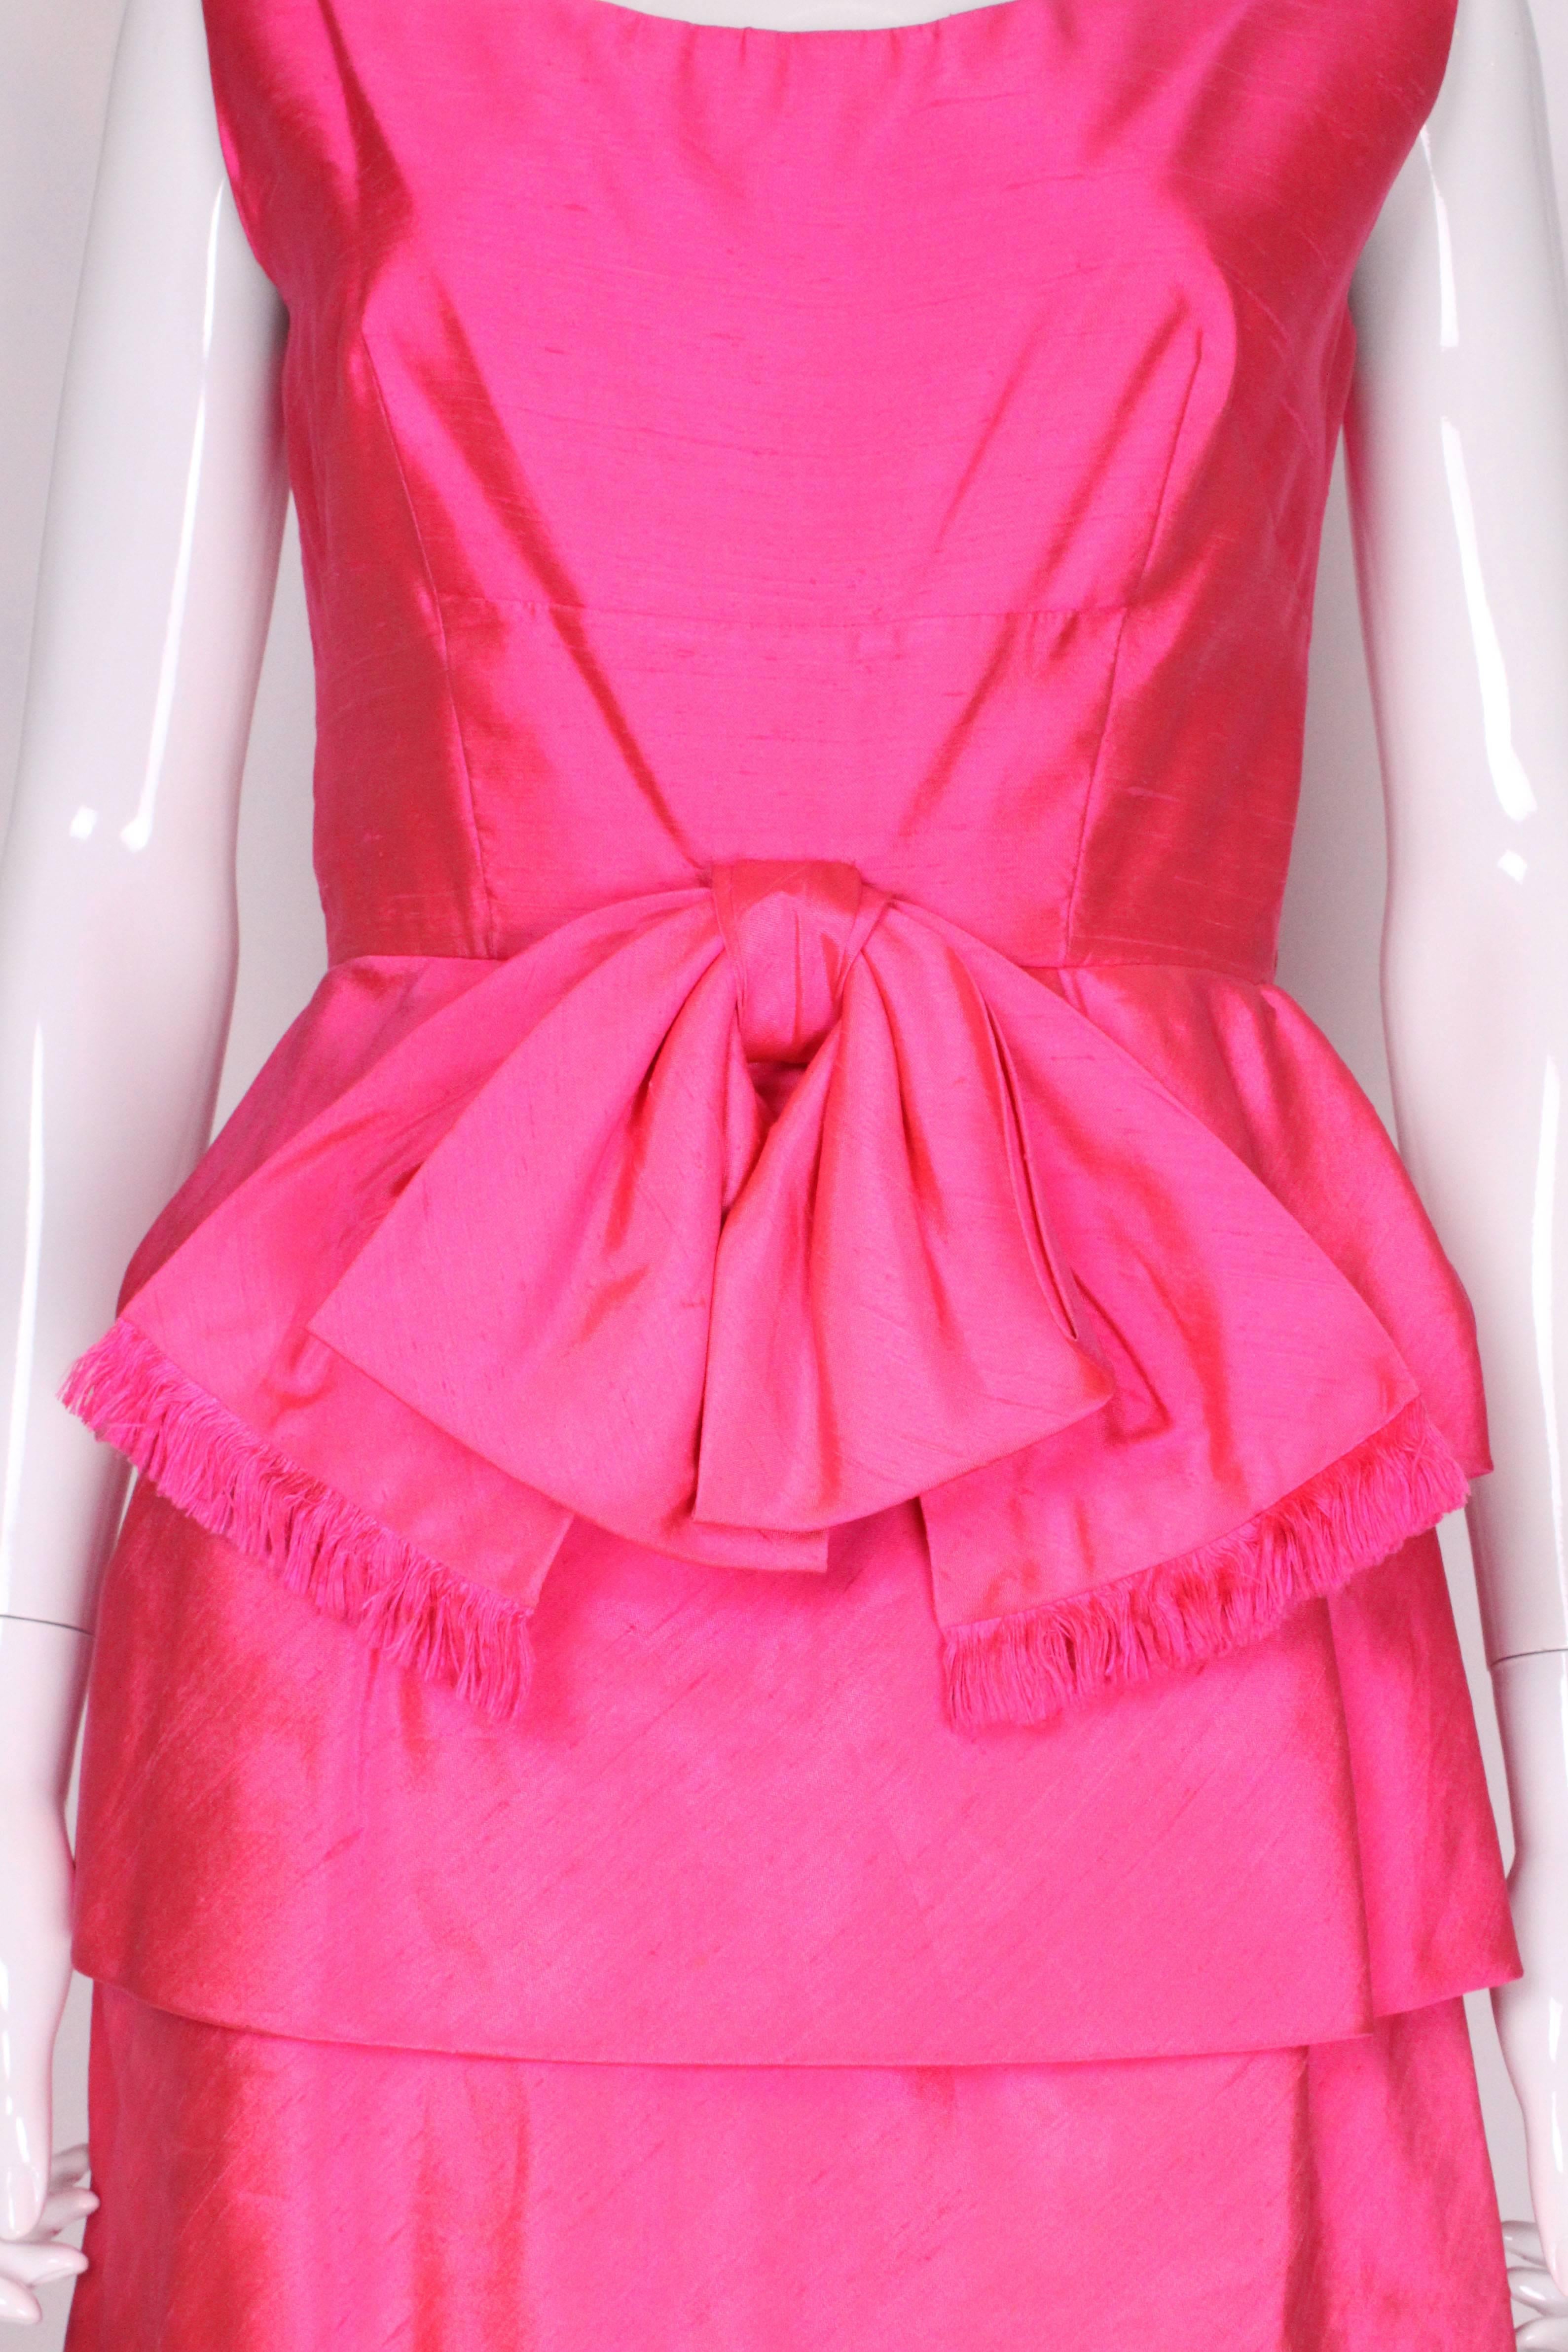 Vintage Bright Pink Raw Silk Cocktail Dress 1